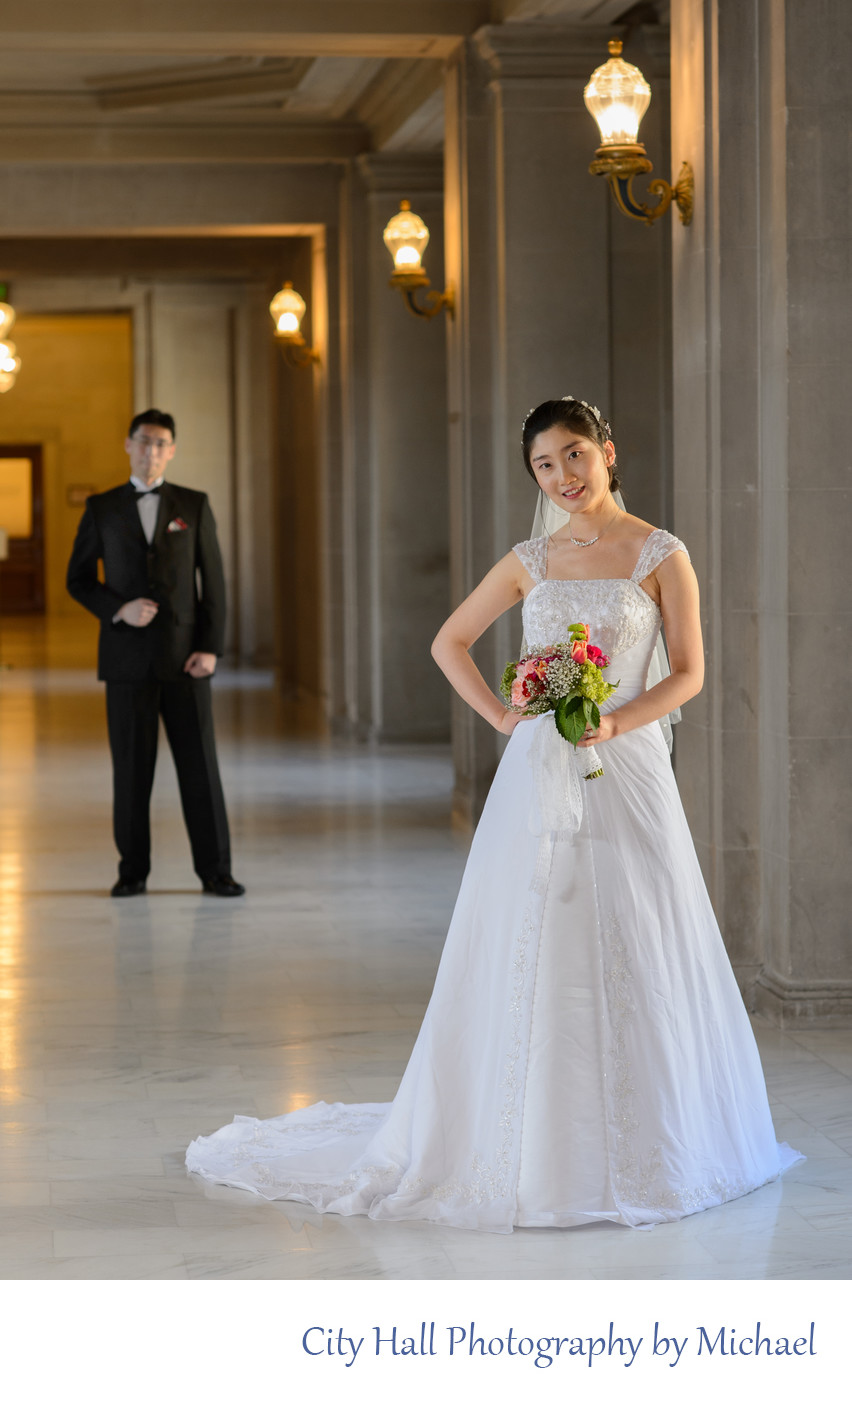 Wedding Photographer San Francisco City Hall - Asian Bride and Groom